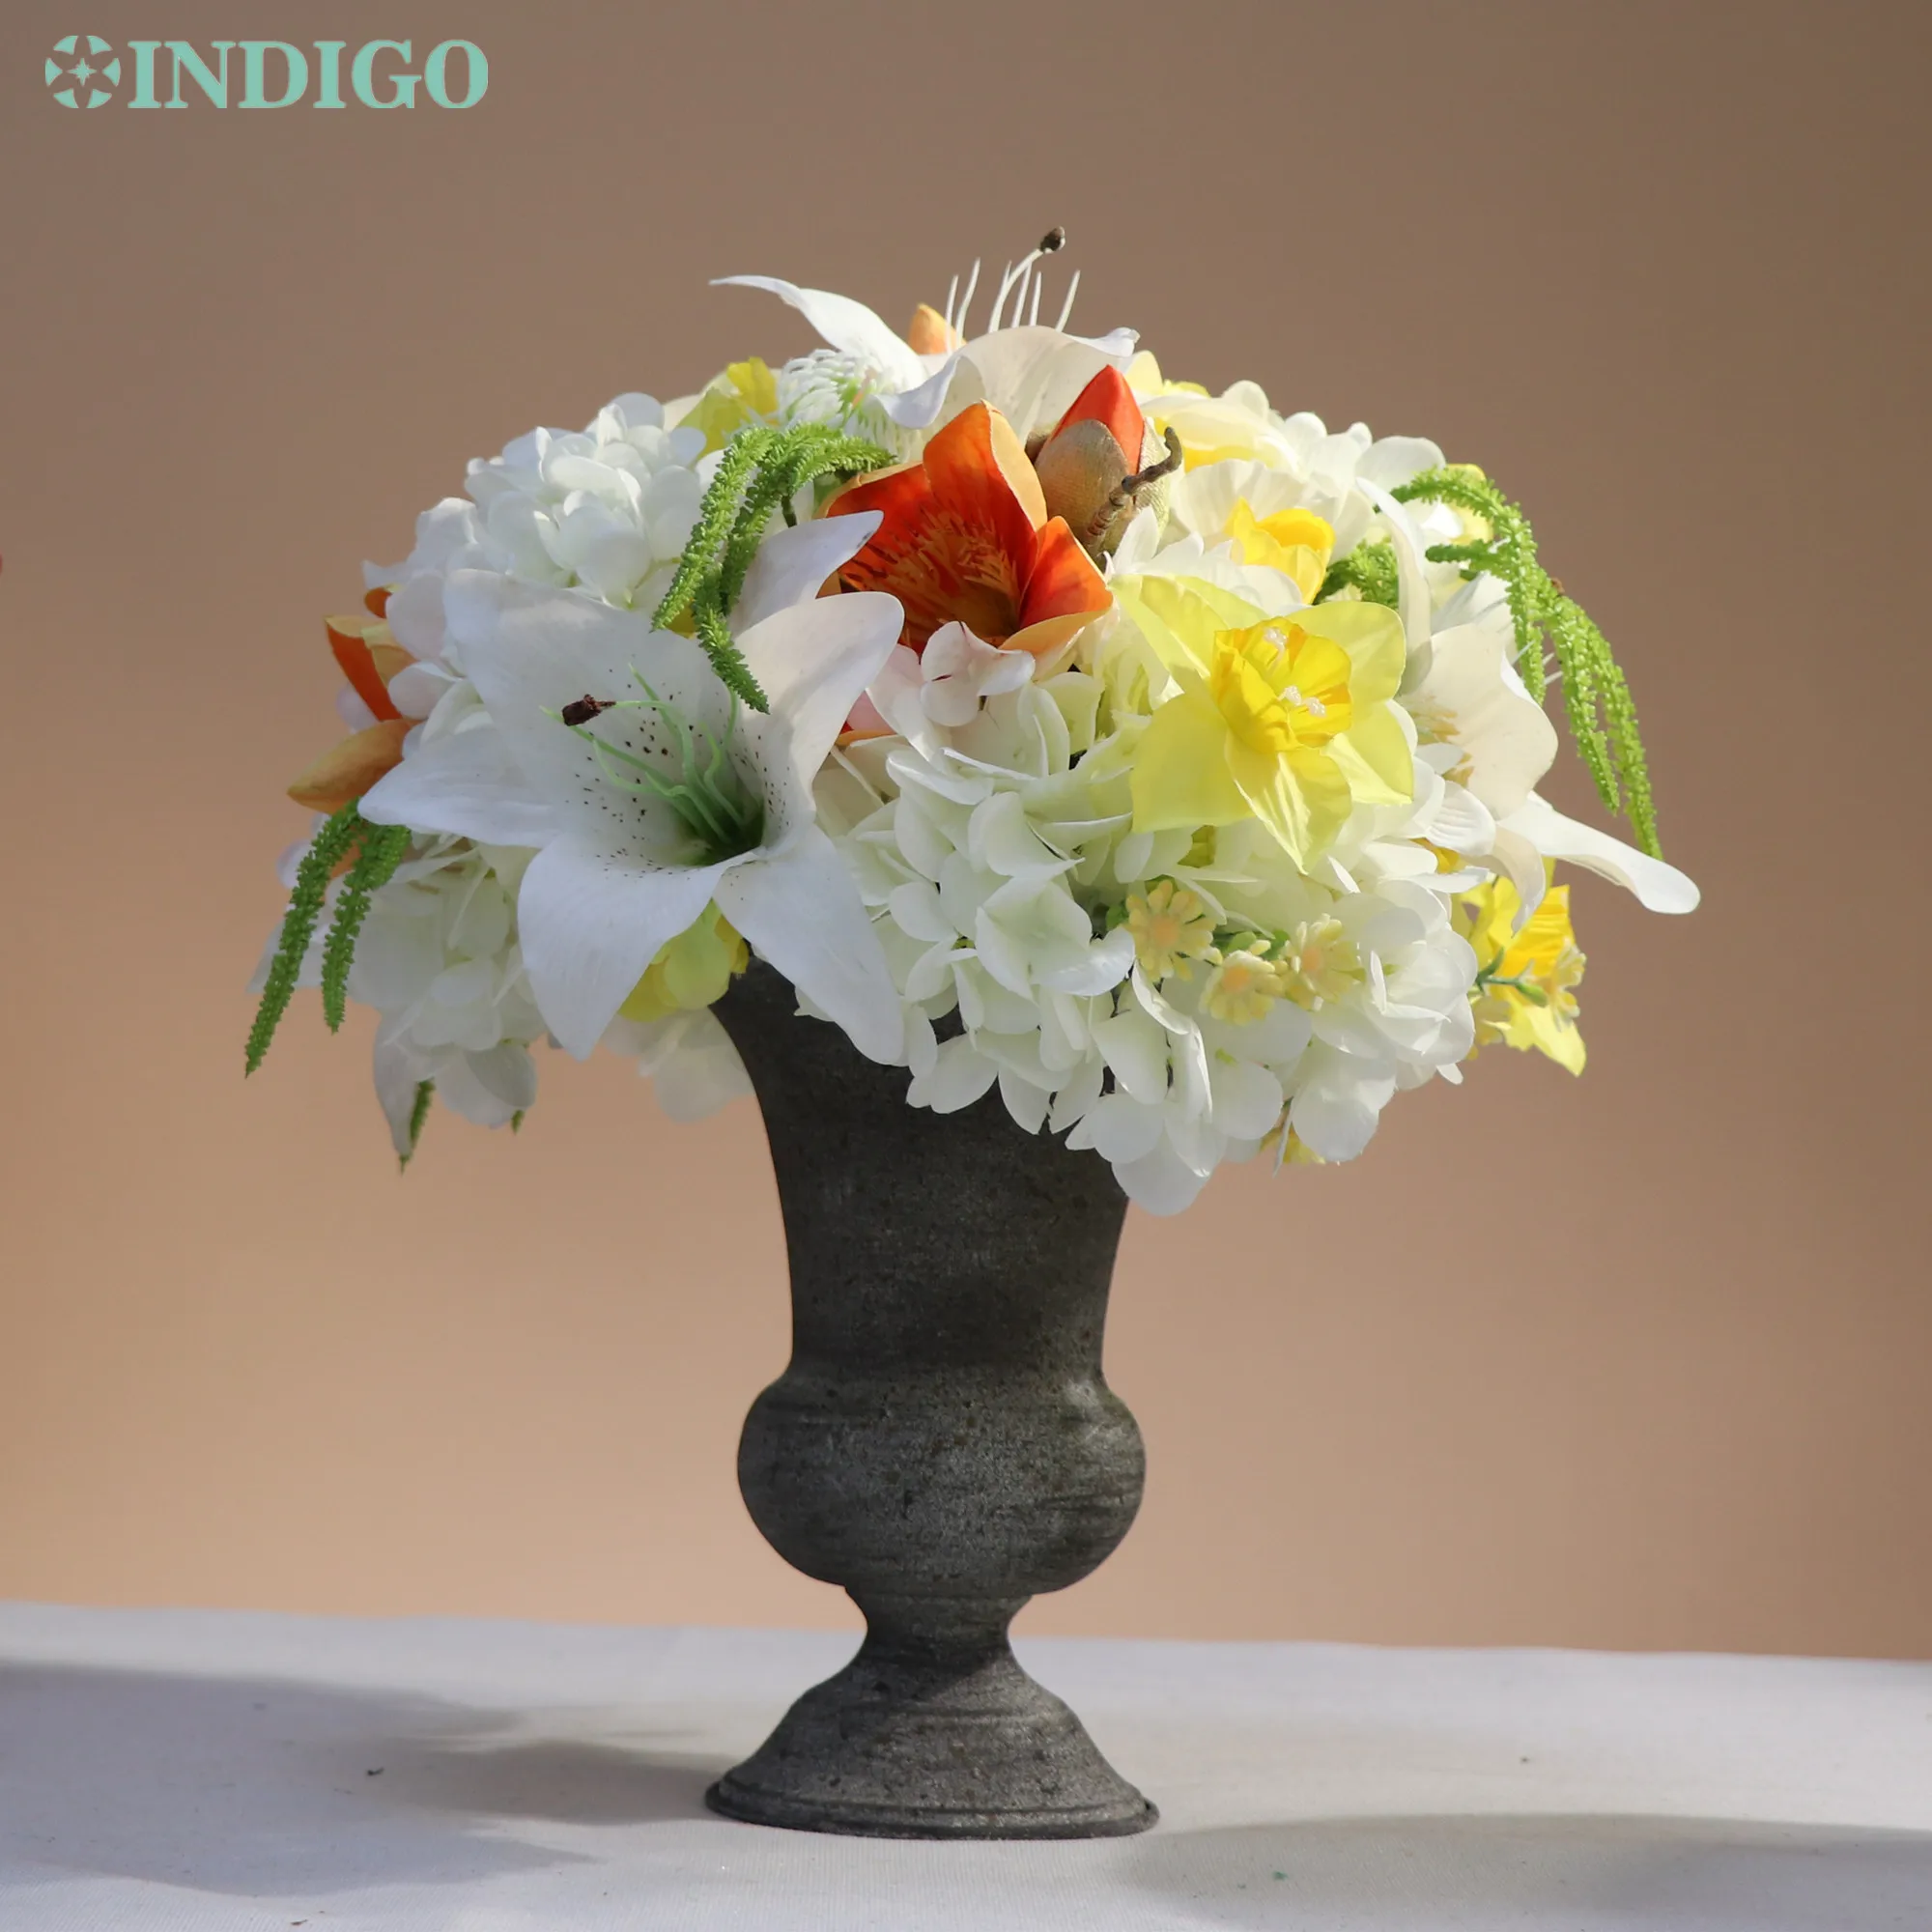 1 Set With Vase) Lily Daffodil Hydrangea Artificial Flower Arrangement Bonsai Designed Christmas Centerpiece - INDIGO